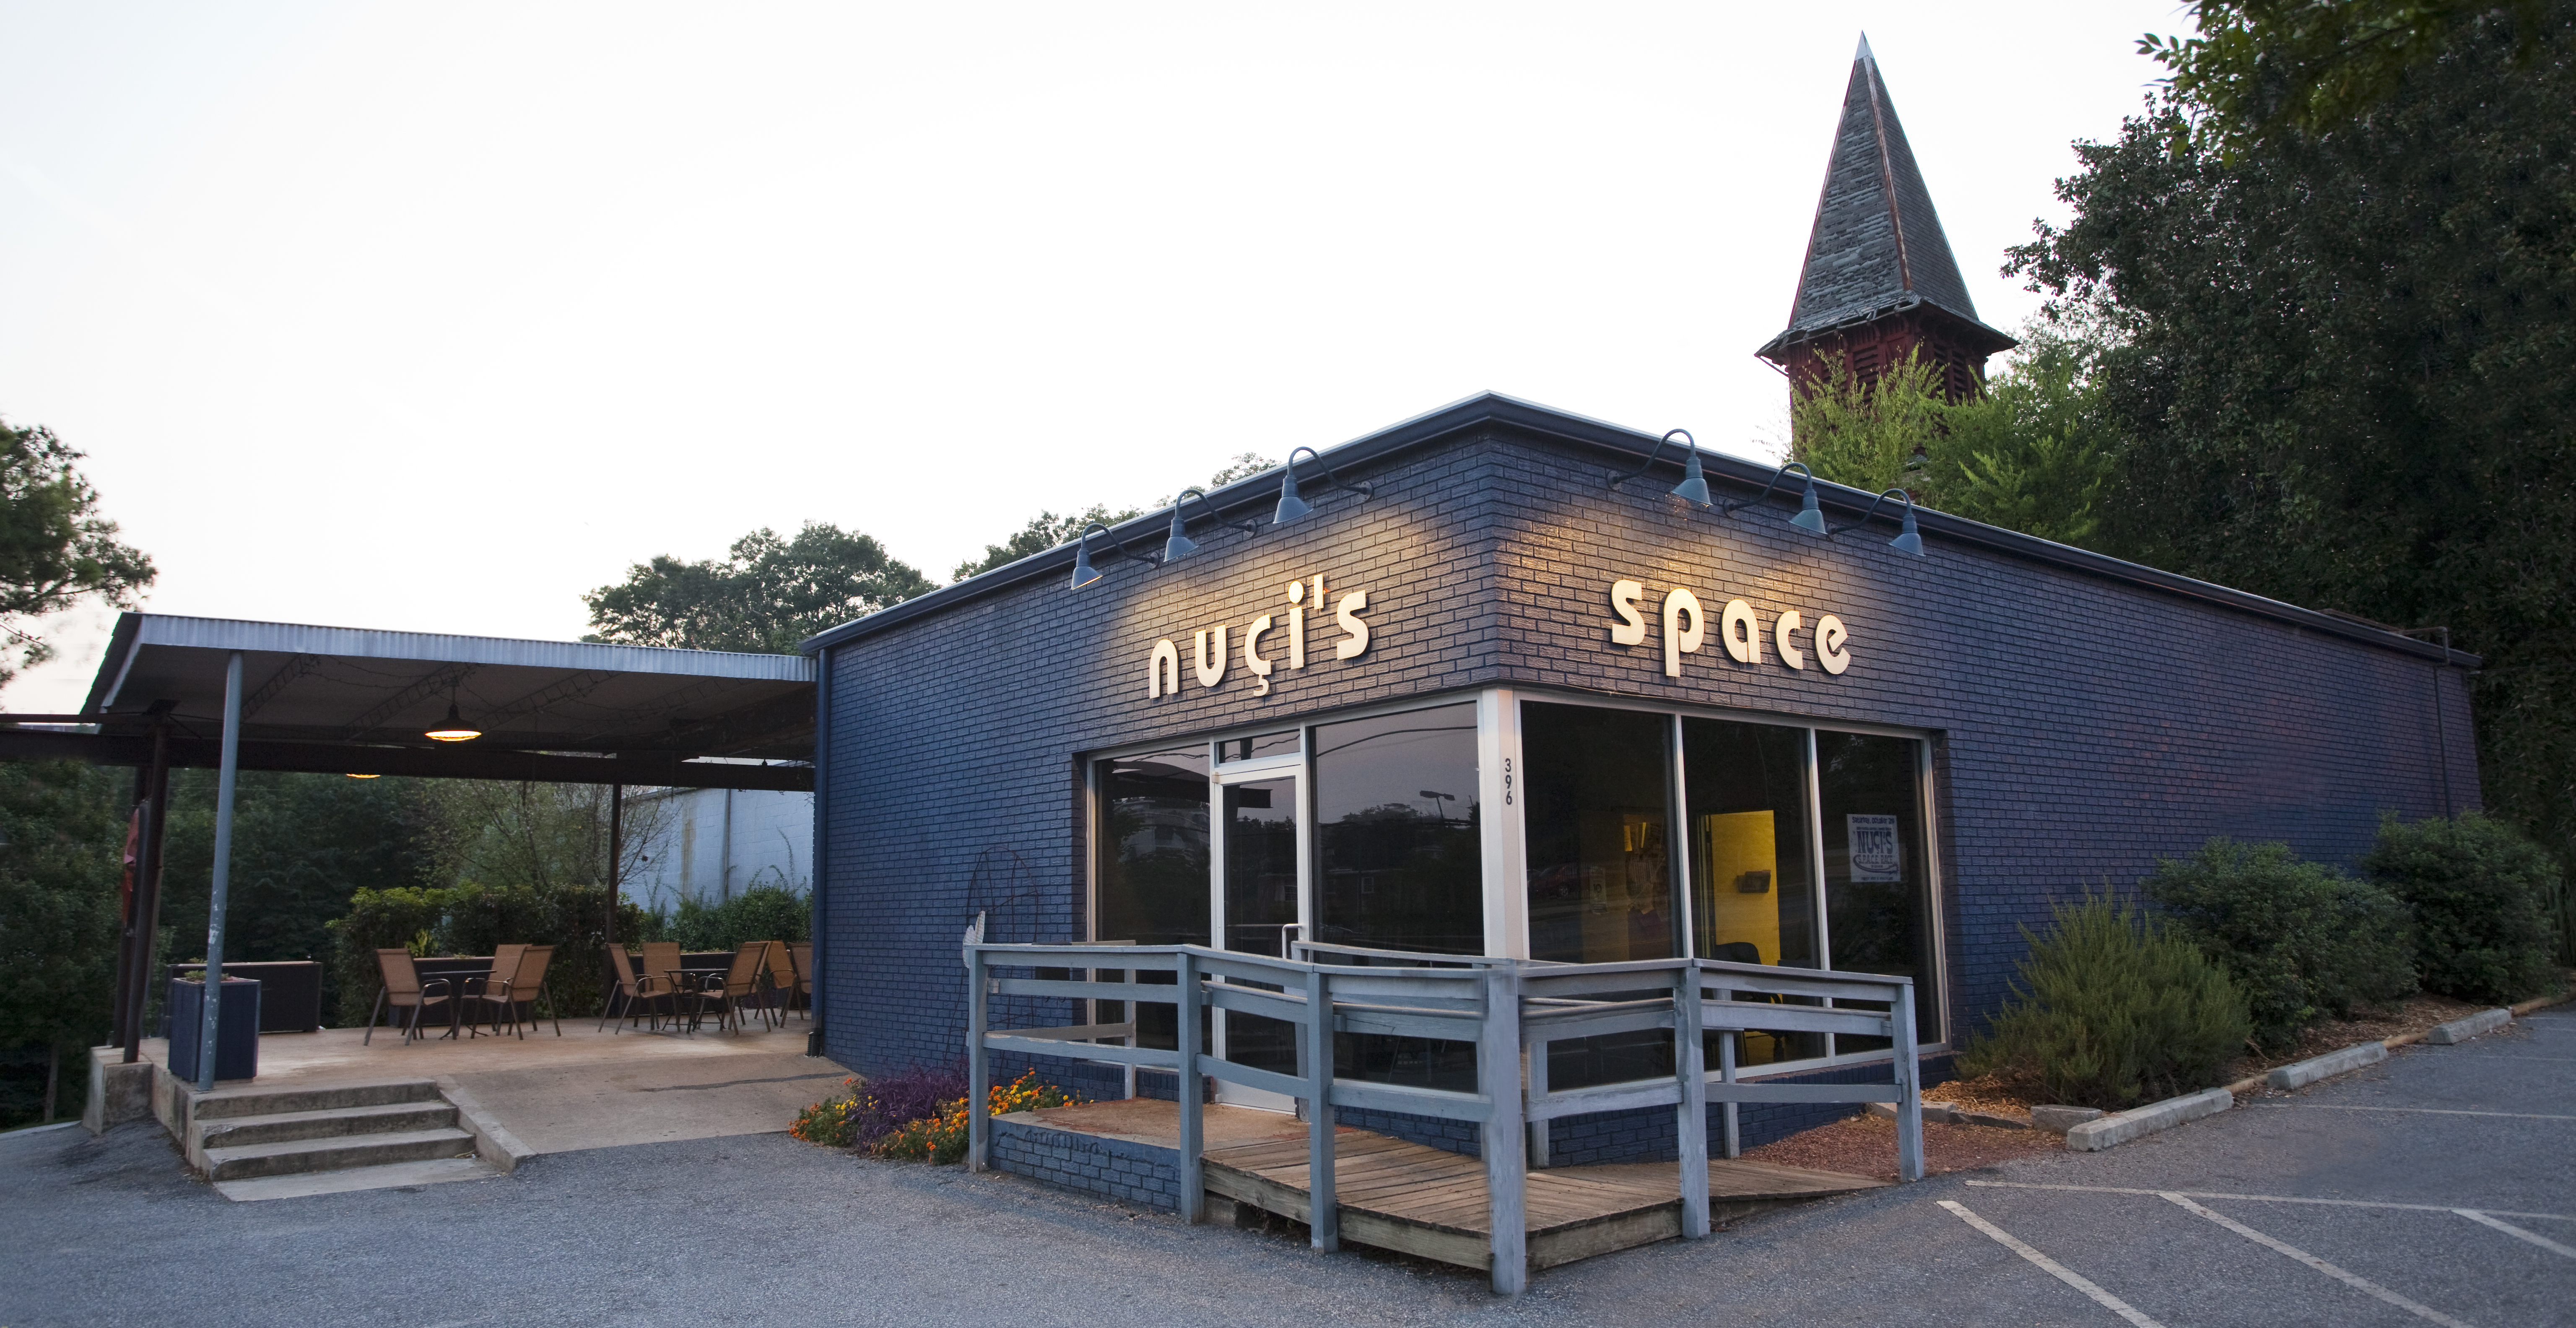 Nuci's Space